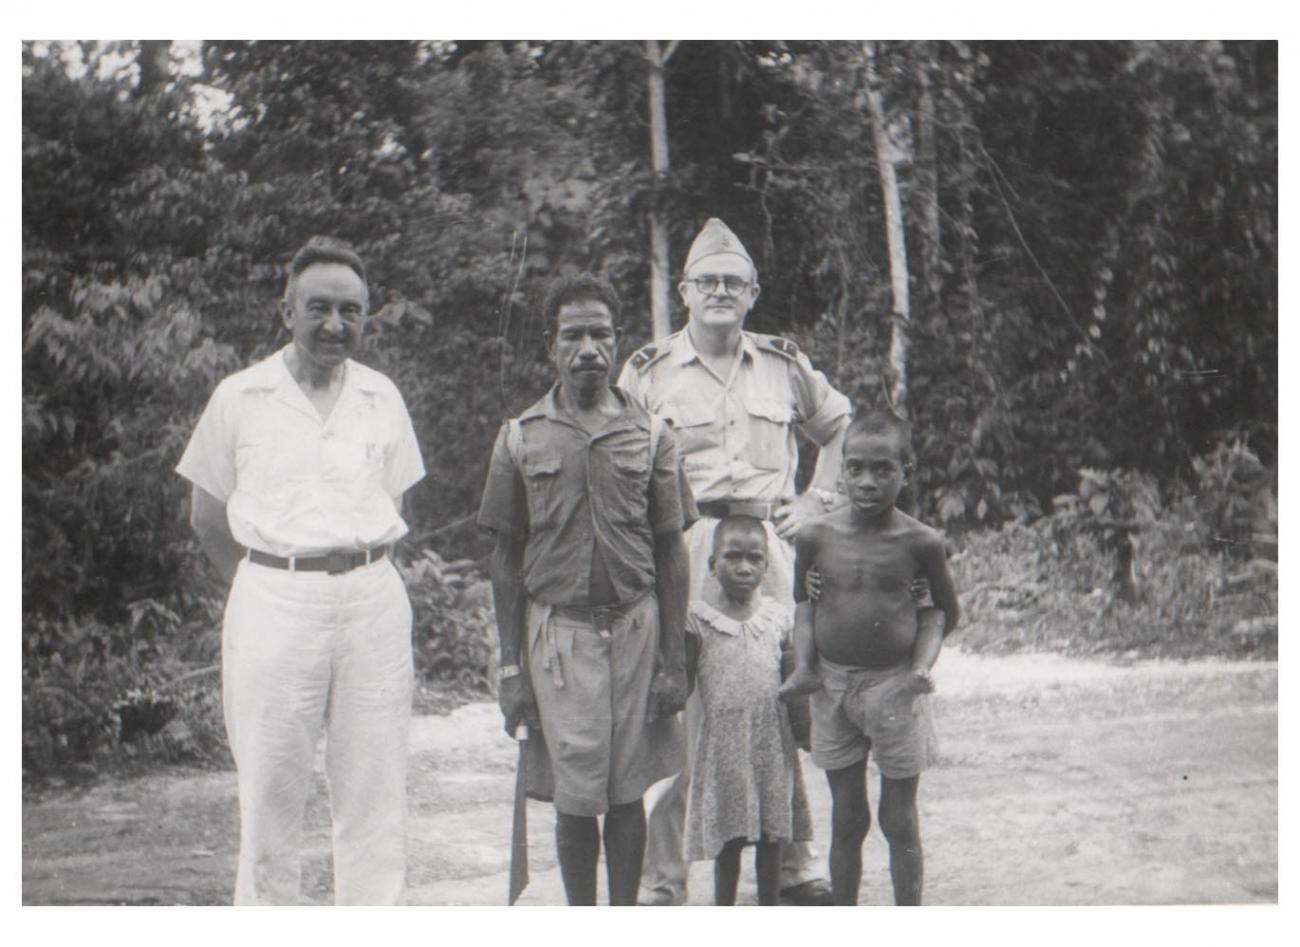 BD/54/50 - 
Biak, geposeerde groepsfoto Papoea&#039;s en Westerlingen
